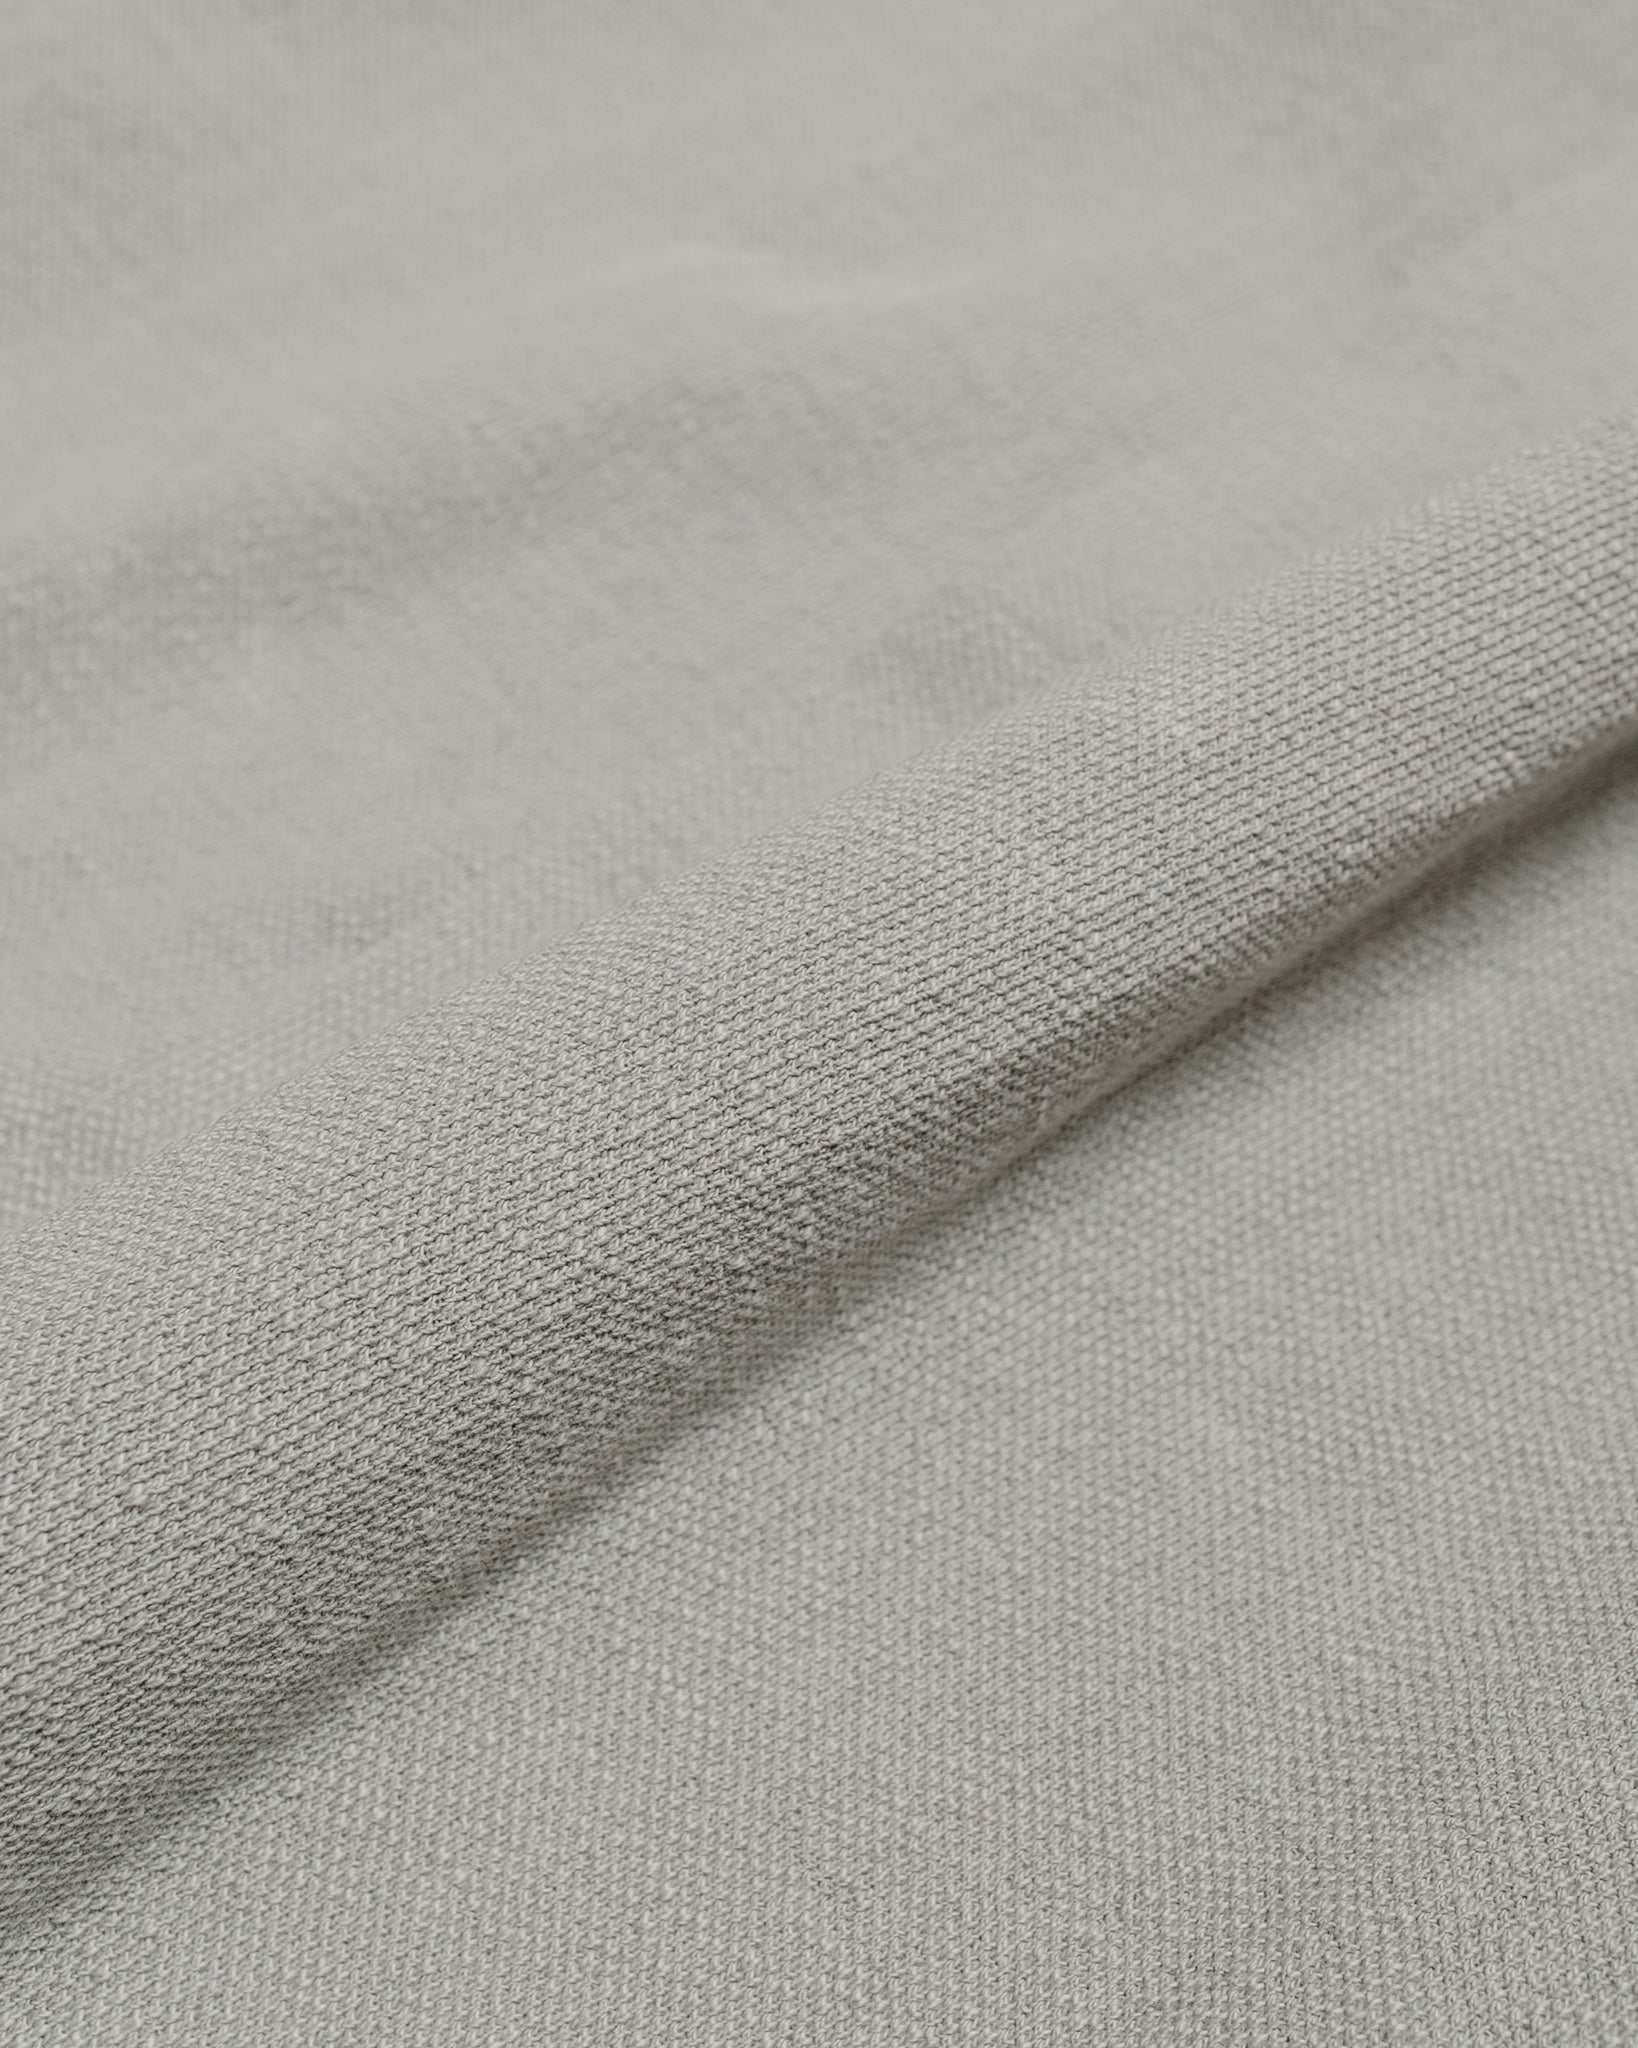 Lady White Co. Double Knit Jacket Post Grey fabric